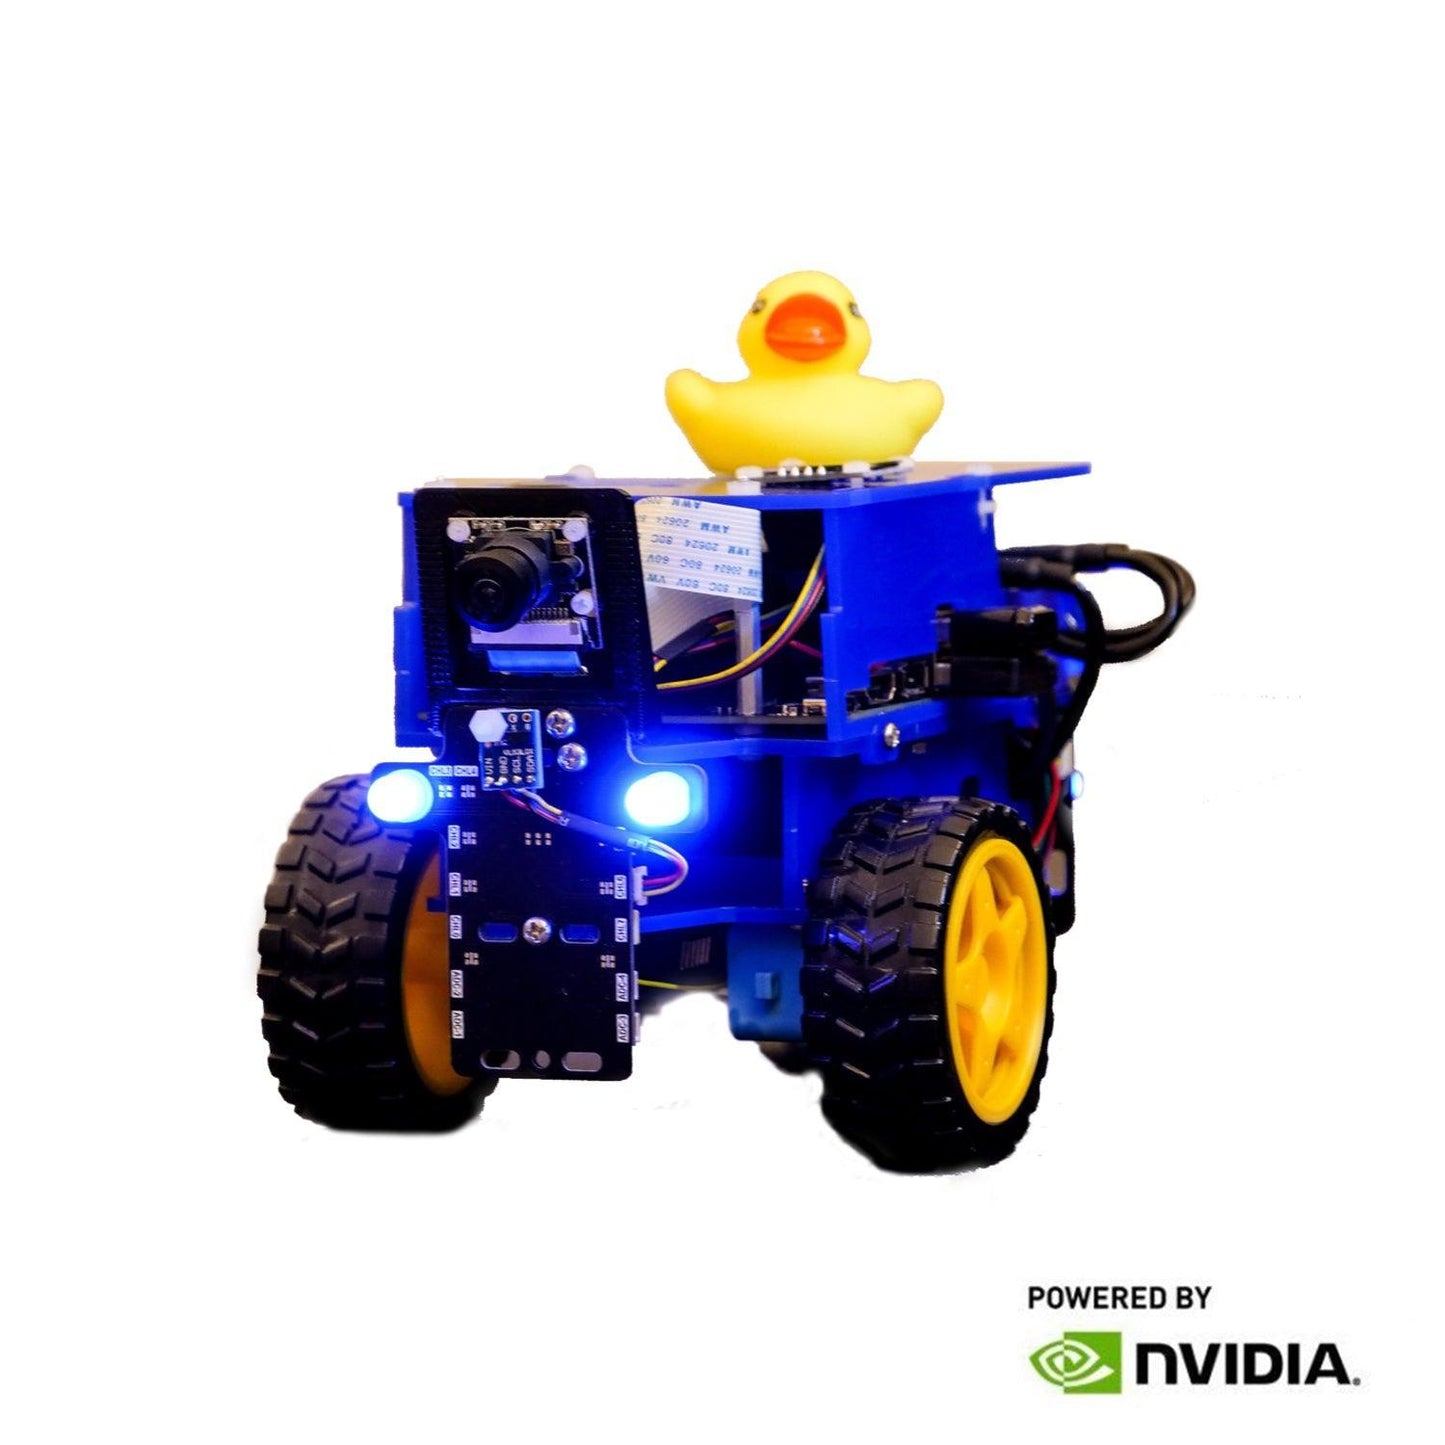 Duckiebot (DB-J-2) - autonomous Nvidia Jetson Nano based vehicle